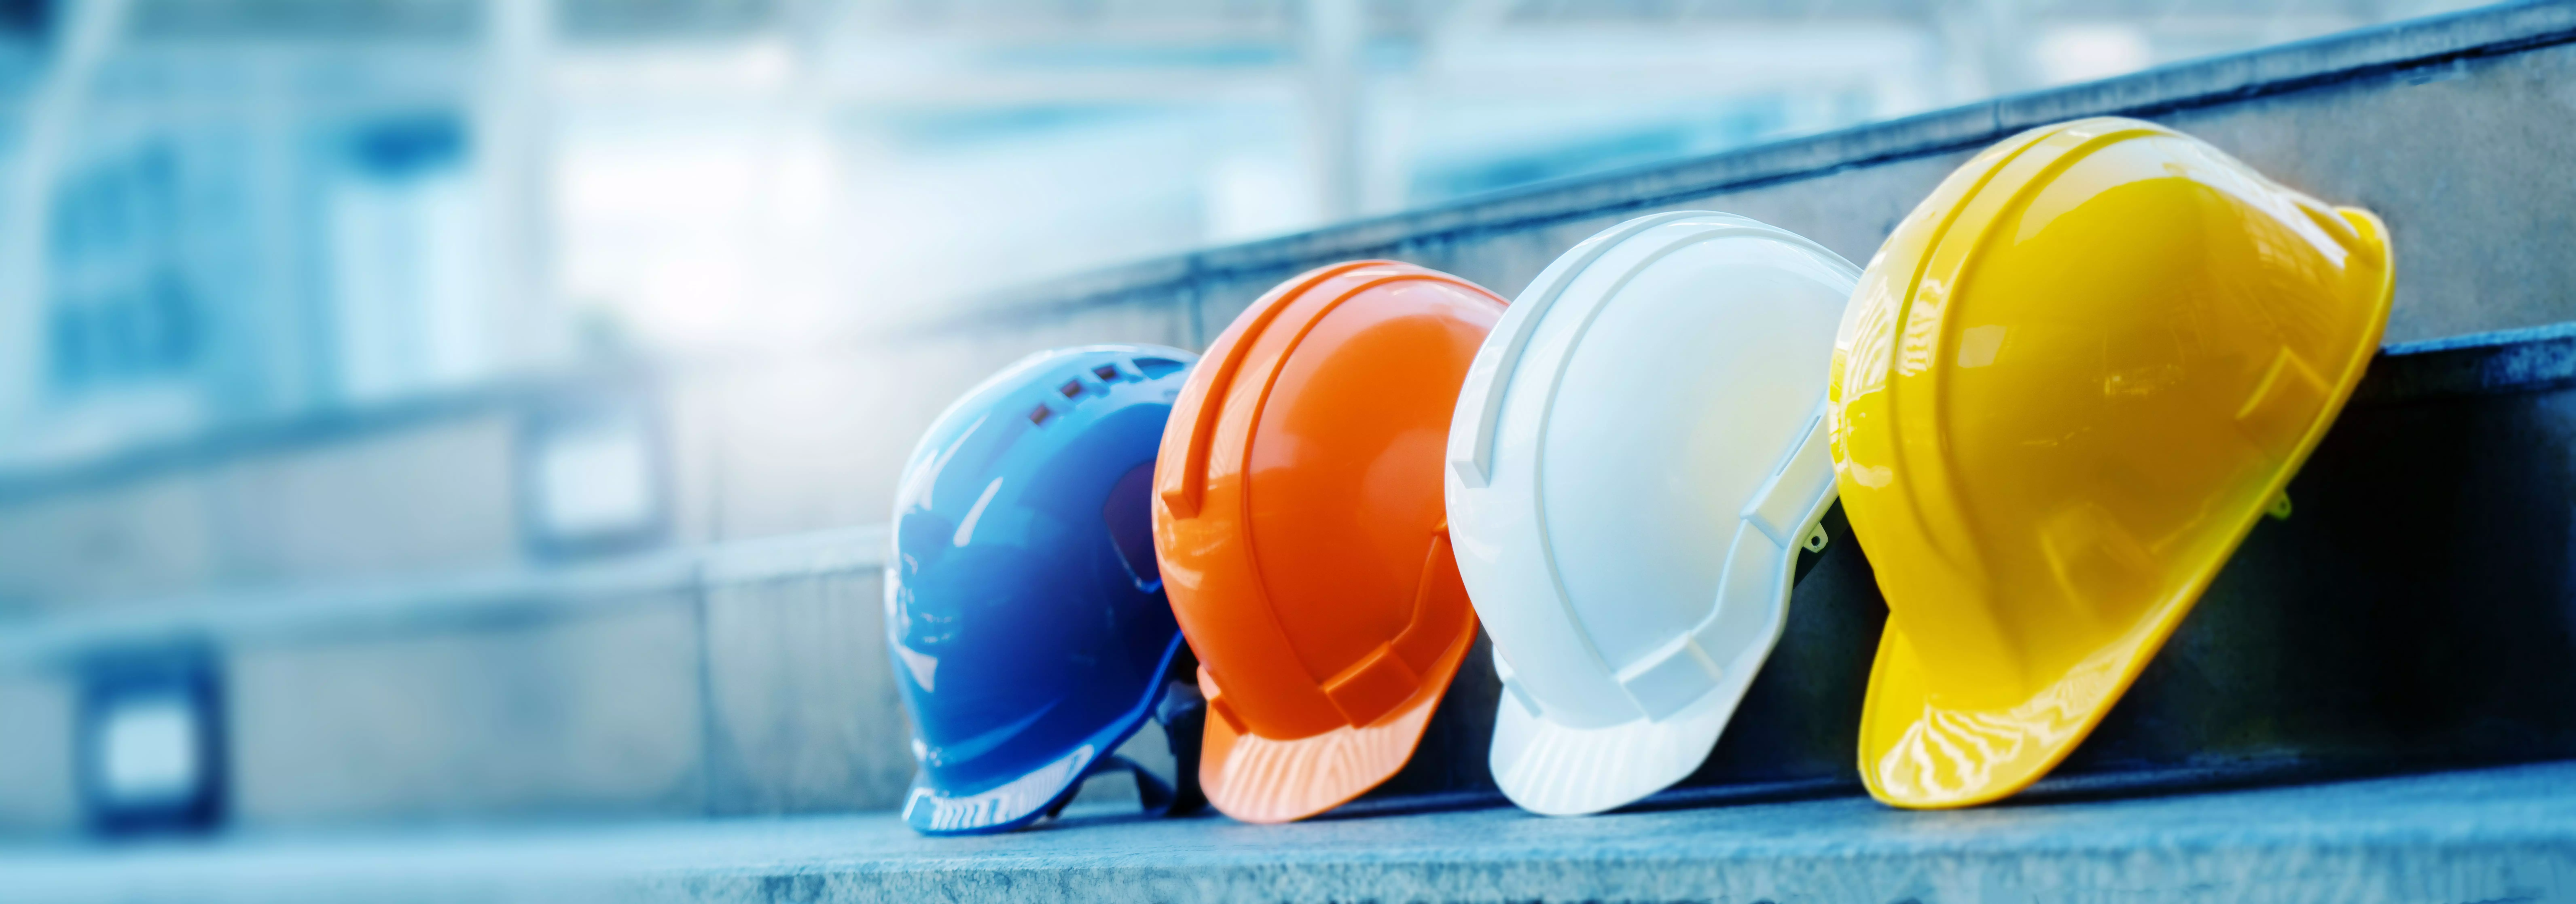 construction project management software